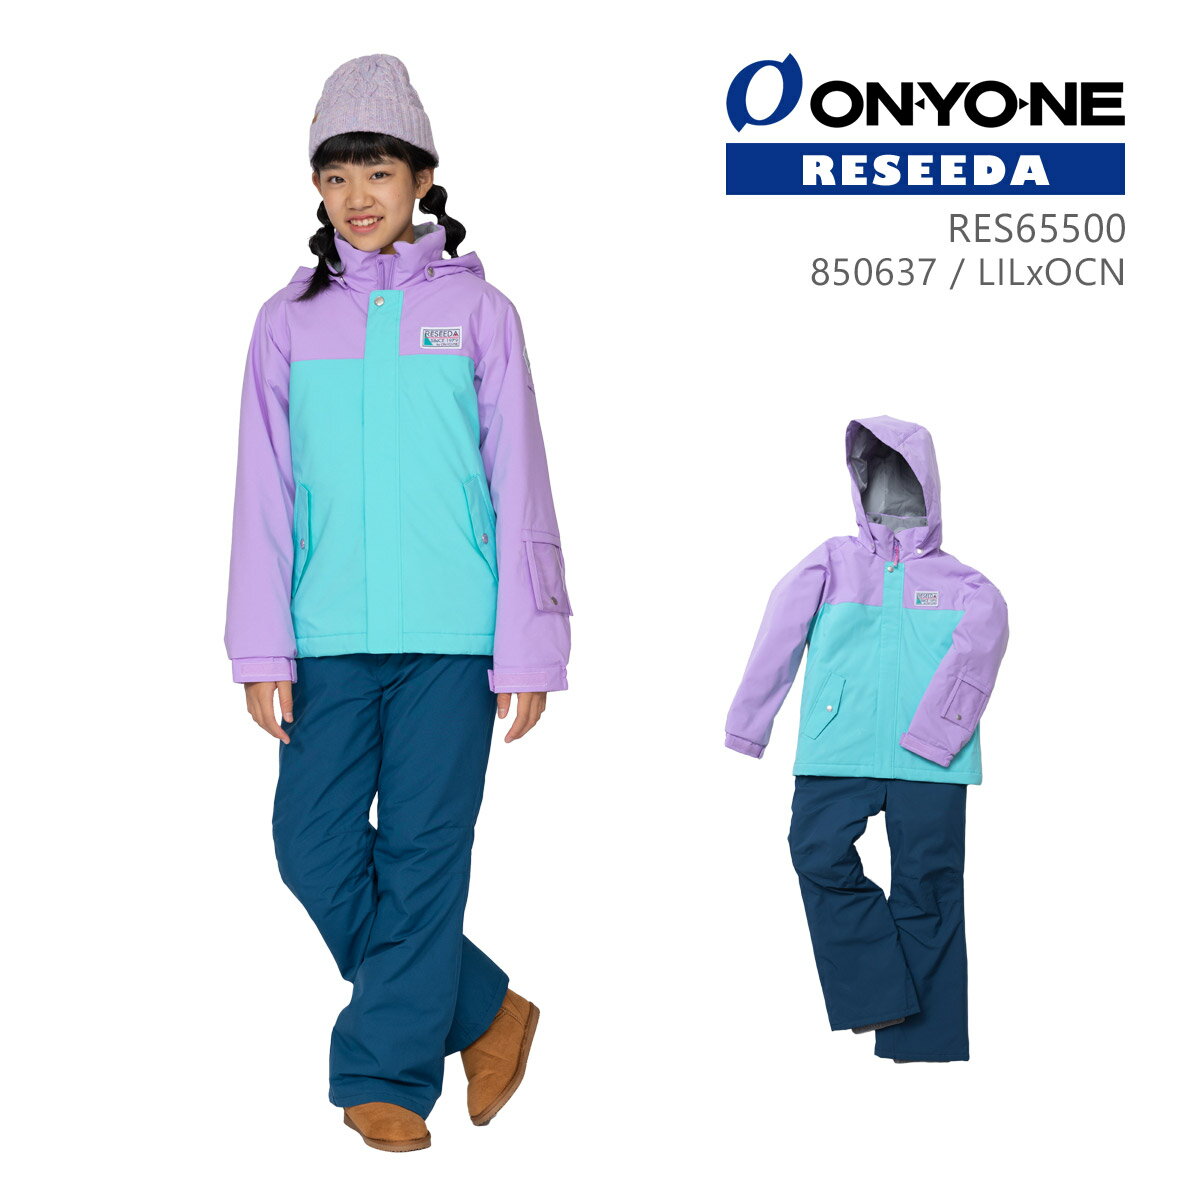 ONYONE RESEEDA(オンヨネ レセーダ) RES65500 JUNIOR SUIT ジュニア スキーウェア 上下セット 子供用 スノースーツ